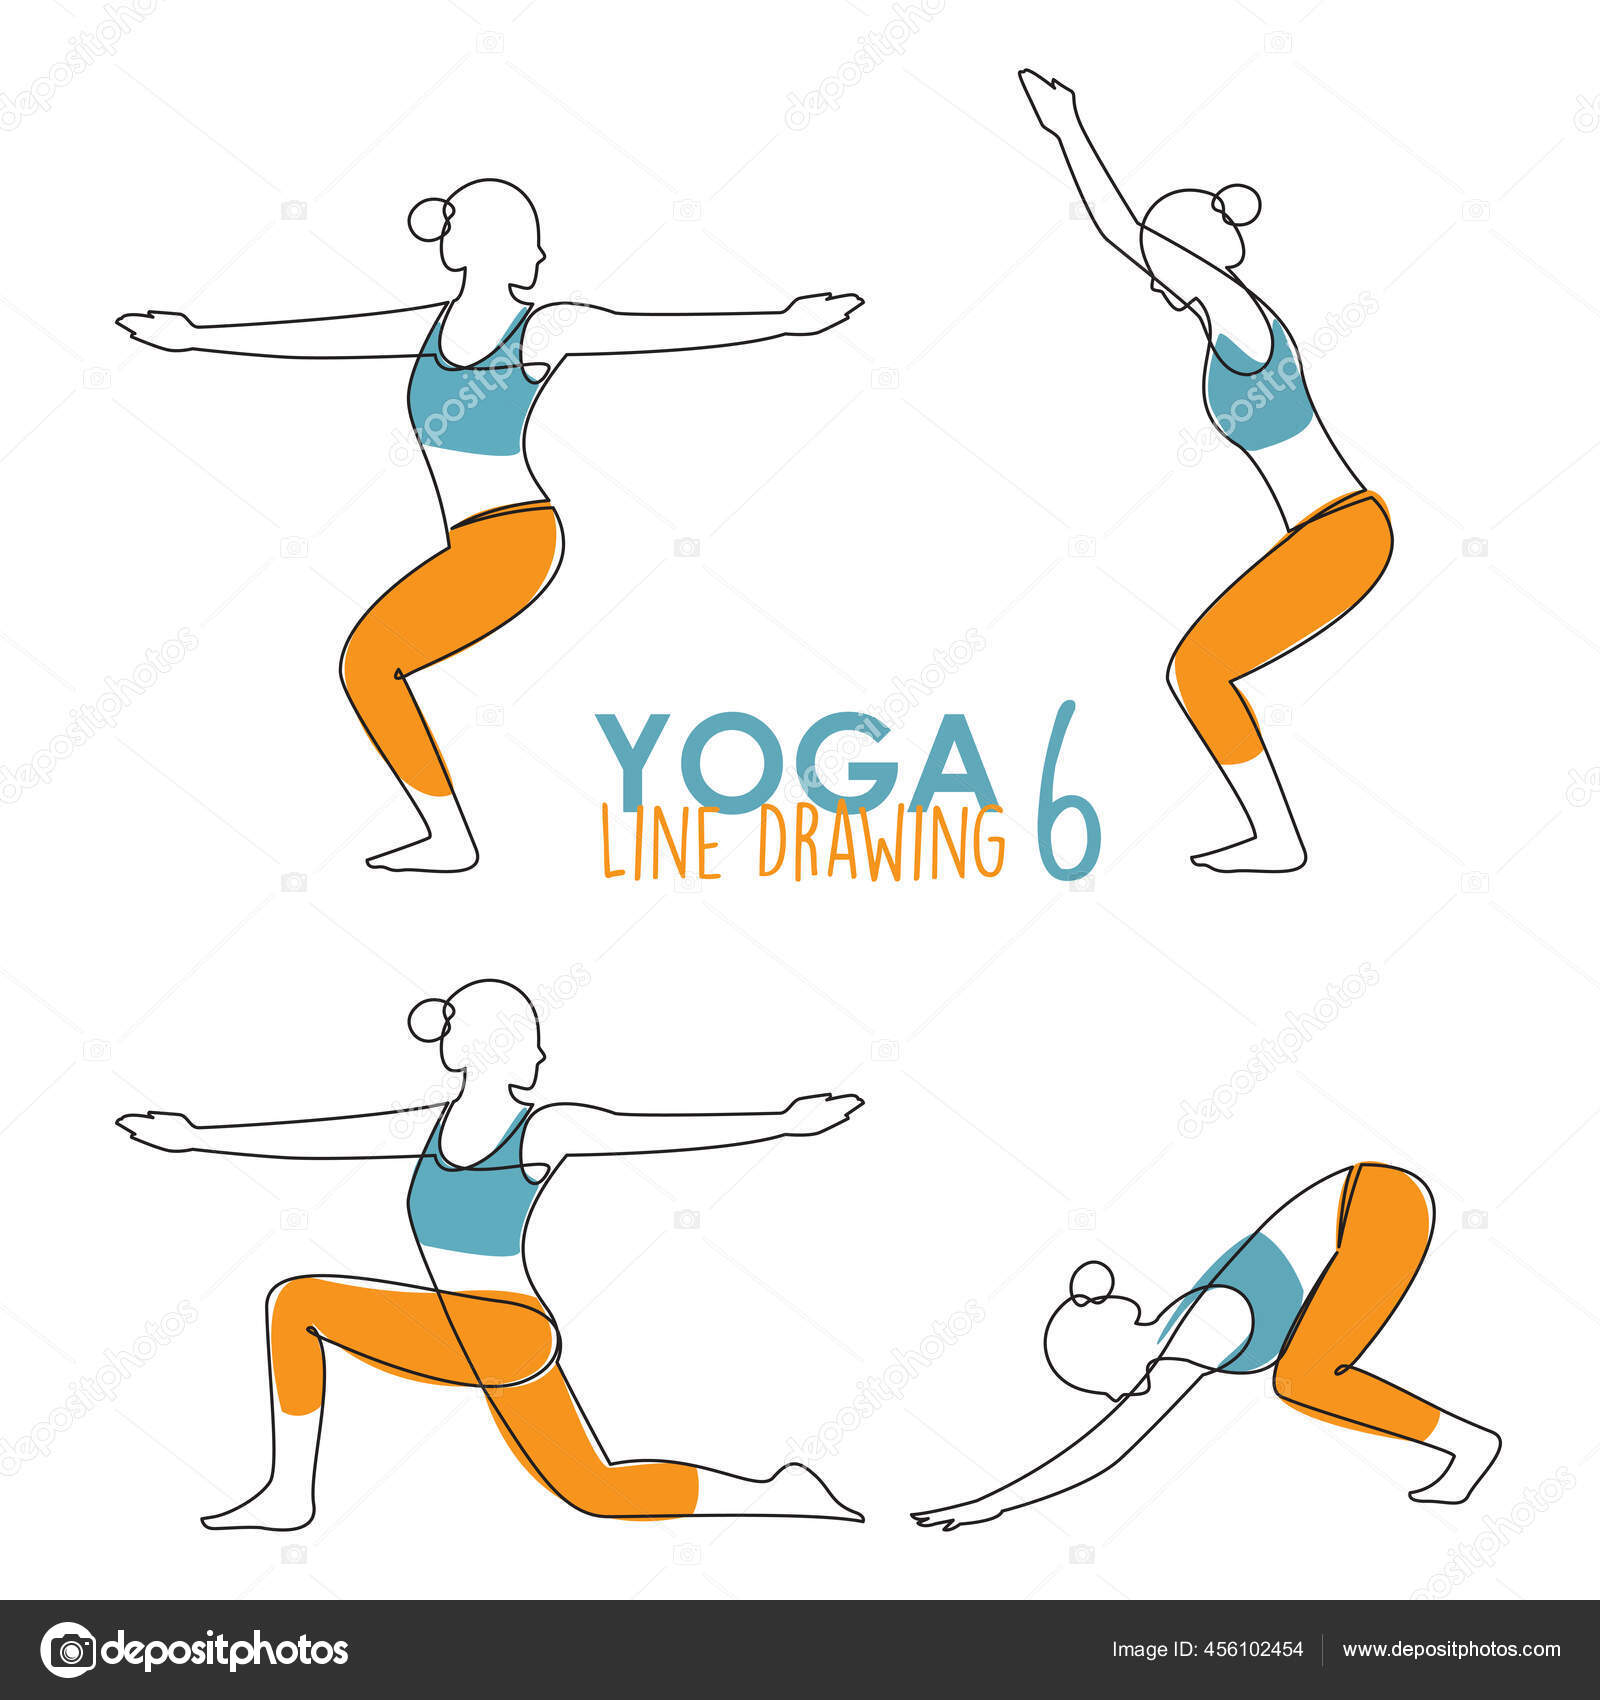 https://st2.depositphotos.com/11342704/45610/v/1600/depositphotos_456102454-stock-illustration-continuous-line-drawing-woman-yoga.jpg